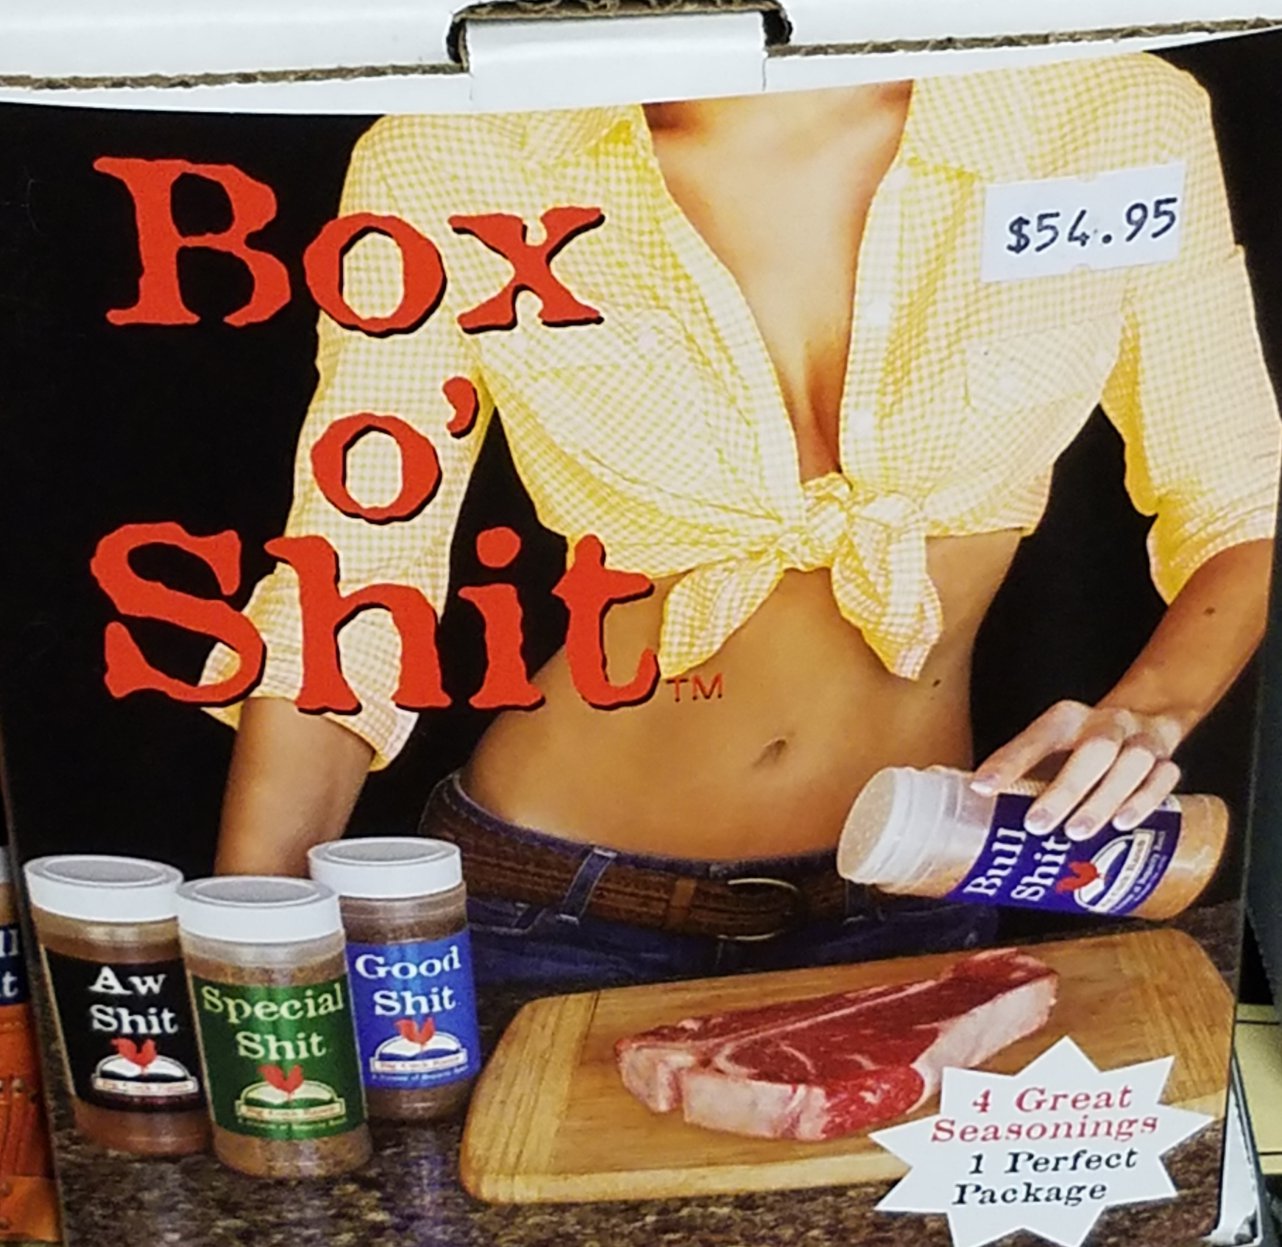 thrift store junk food - Box $54.95 Shit Good Aw Shit Ipecia Shit Shit 4 Great Seasonings 1 Perfect Package